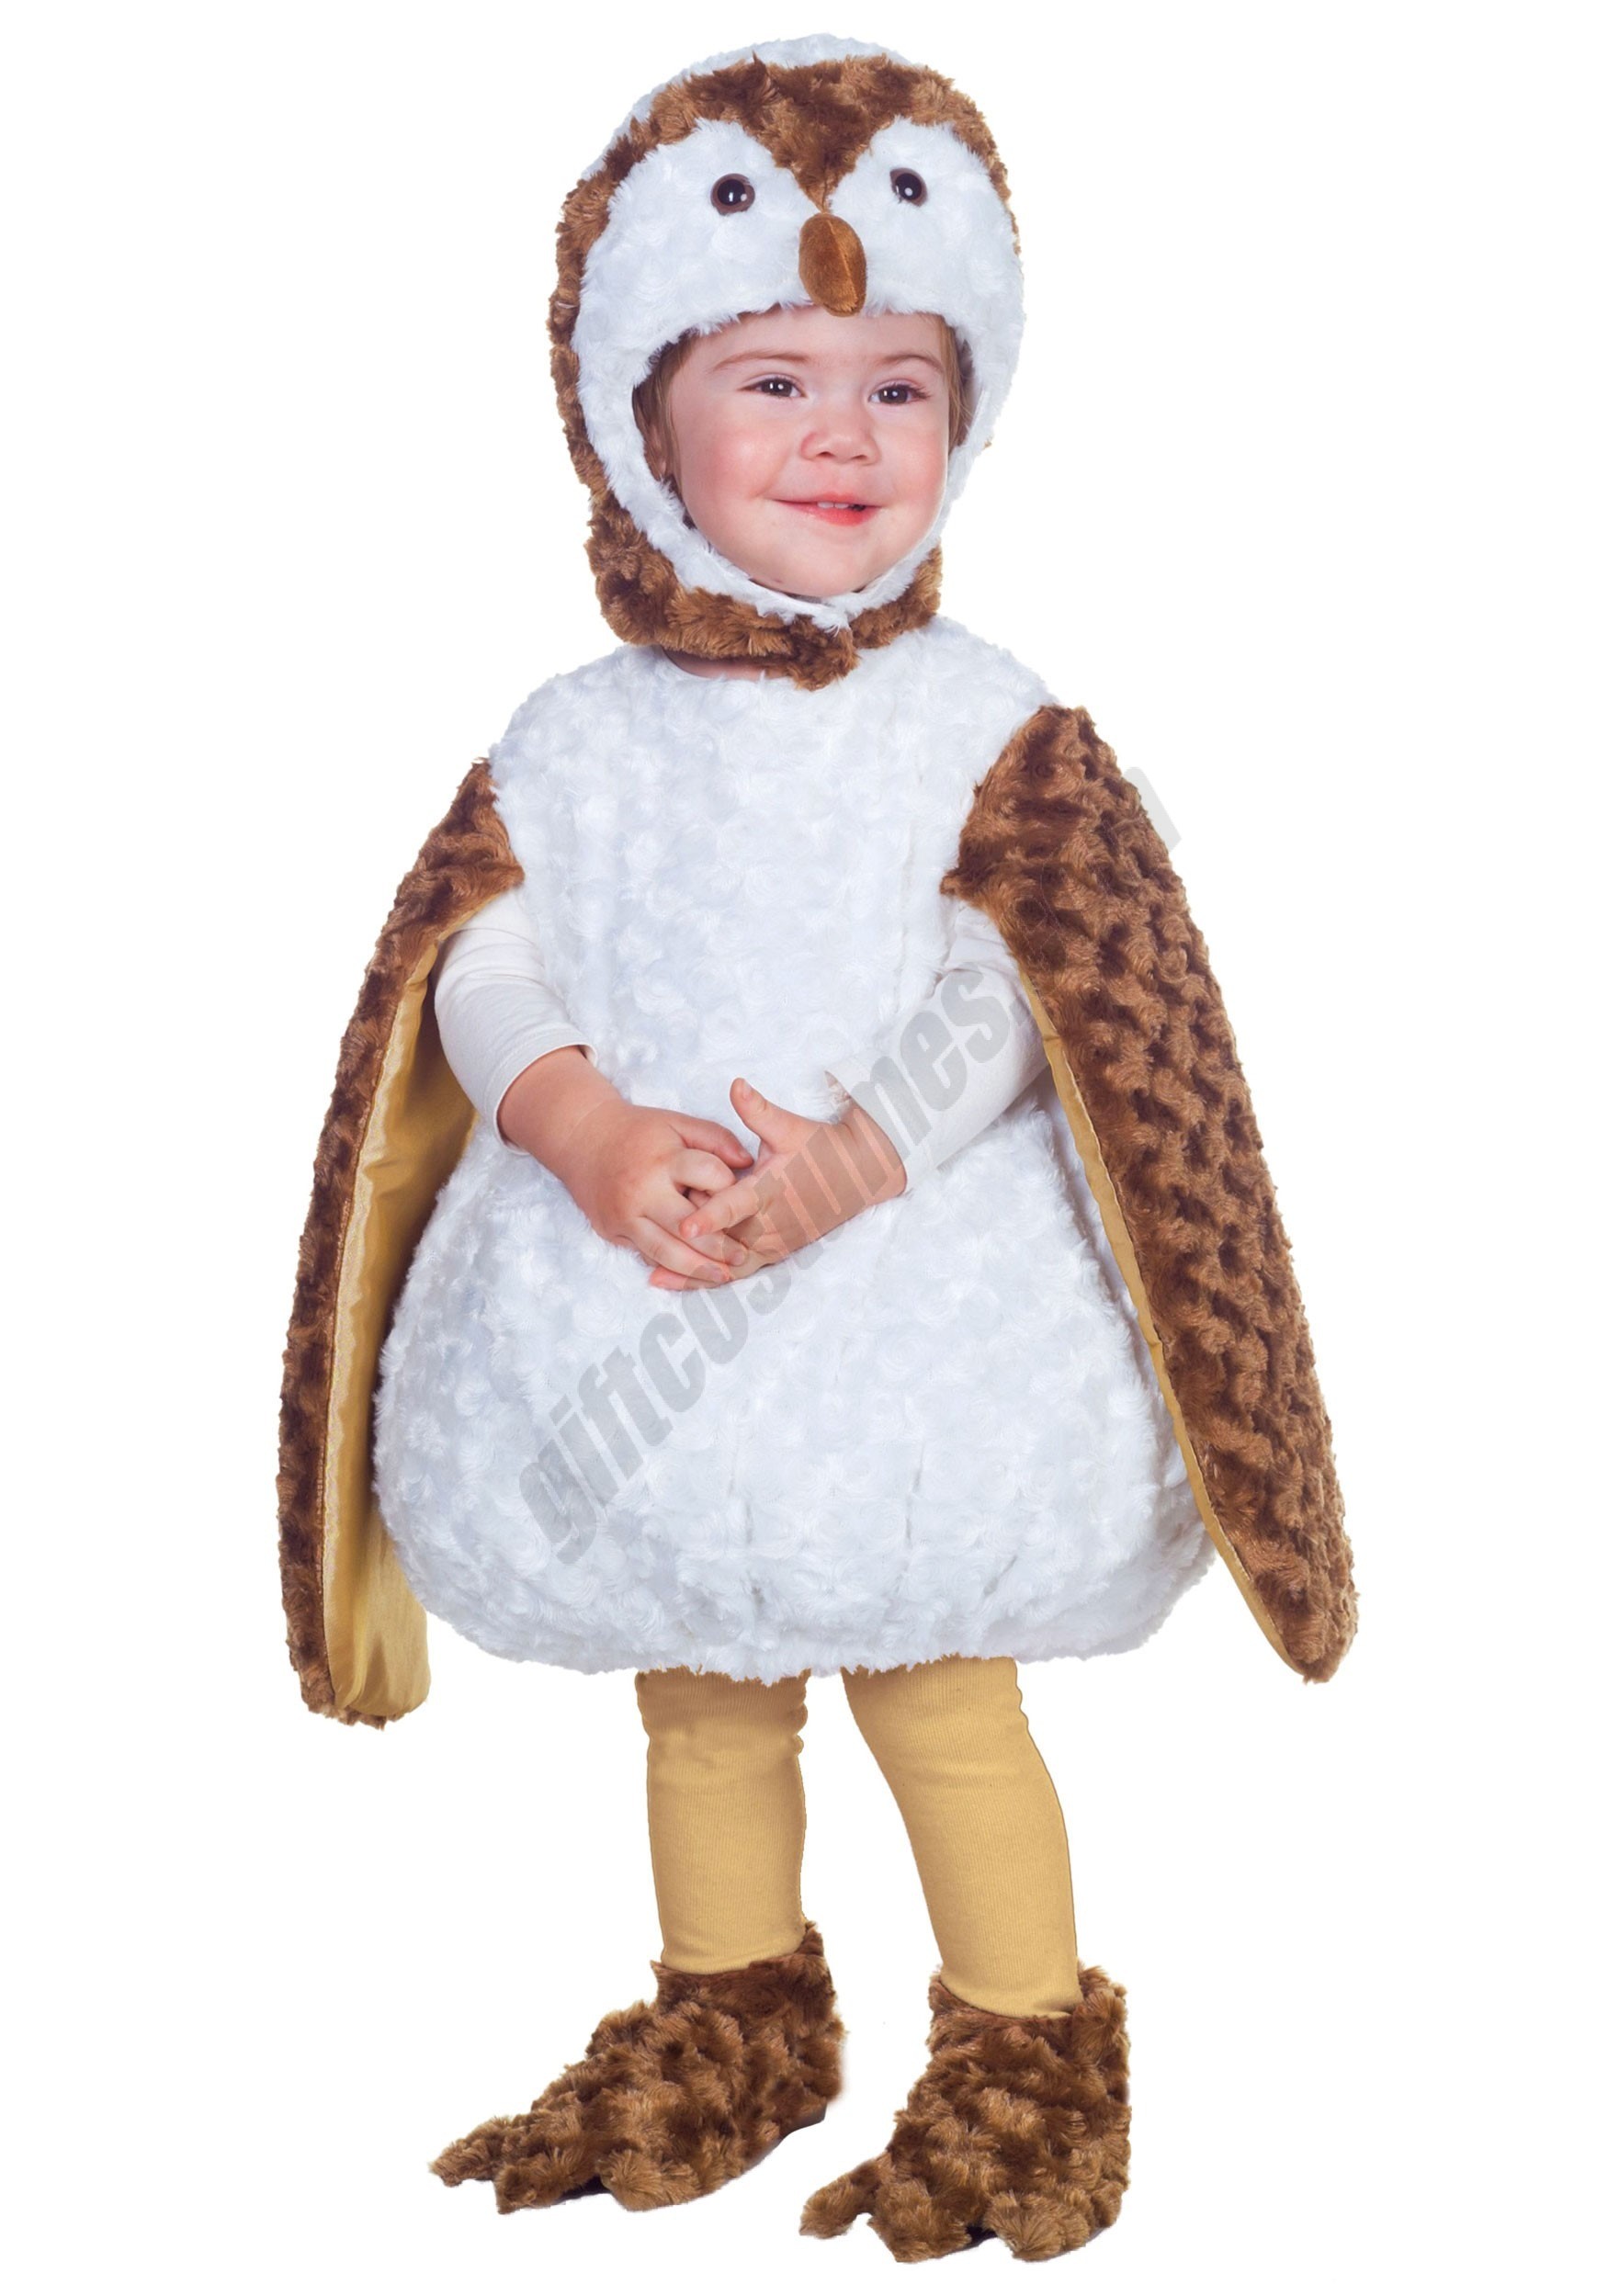 Toddler White Barn Owl Costume Promotions - Toddler White Barn Owl Costume Promotions